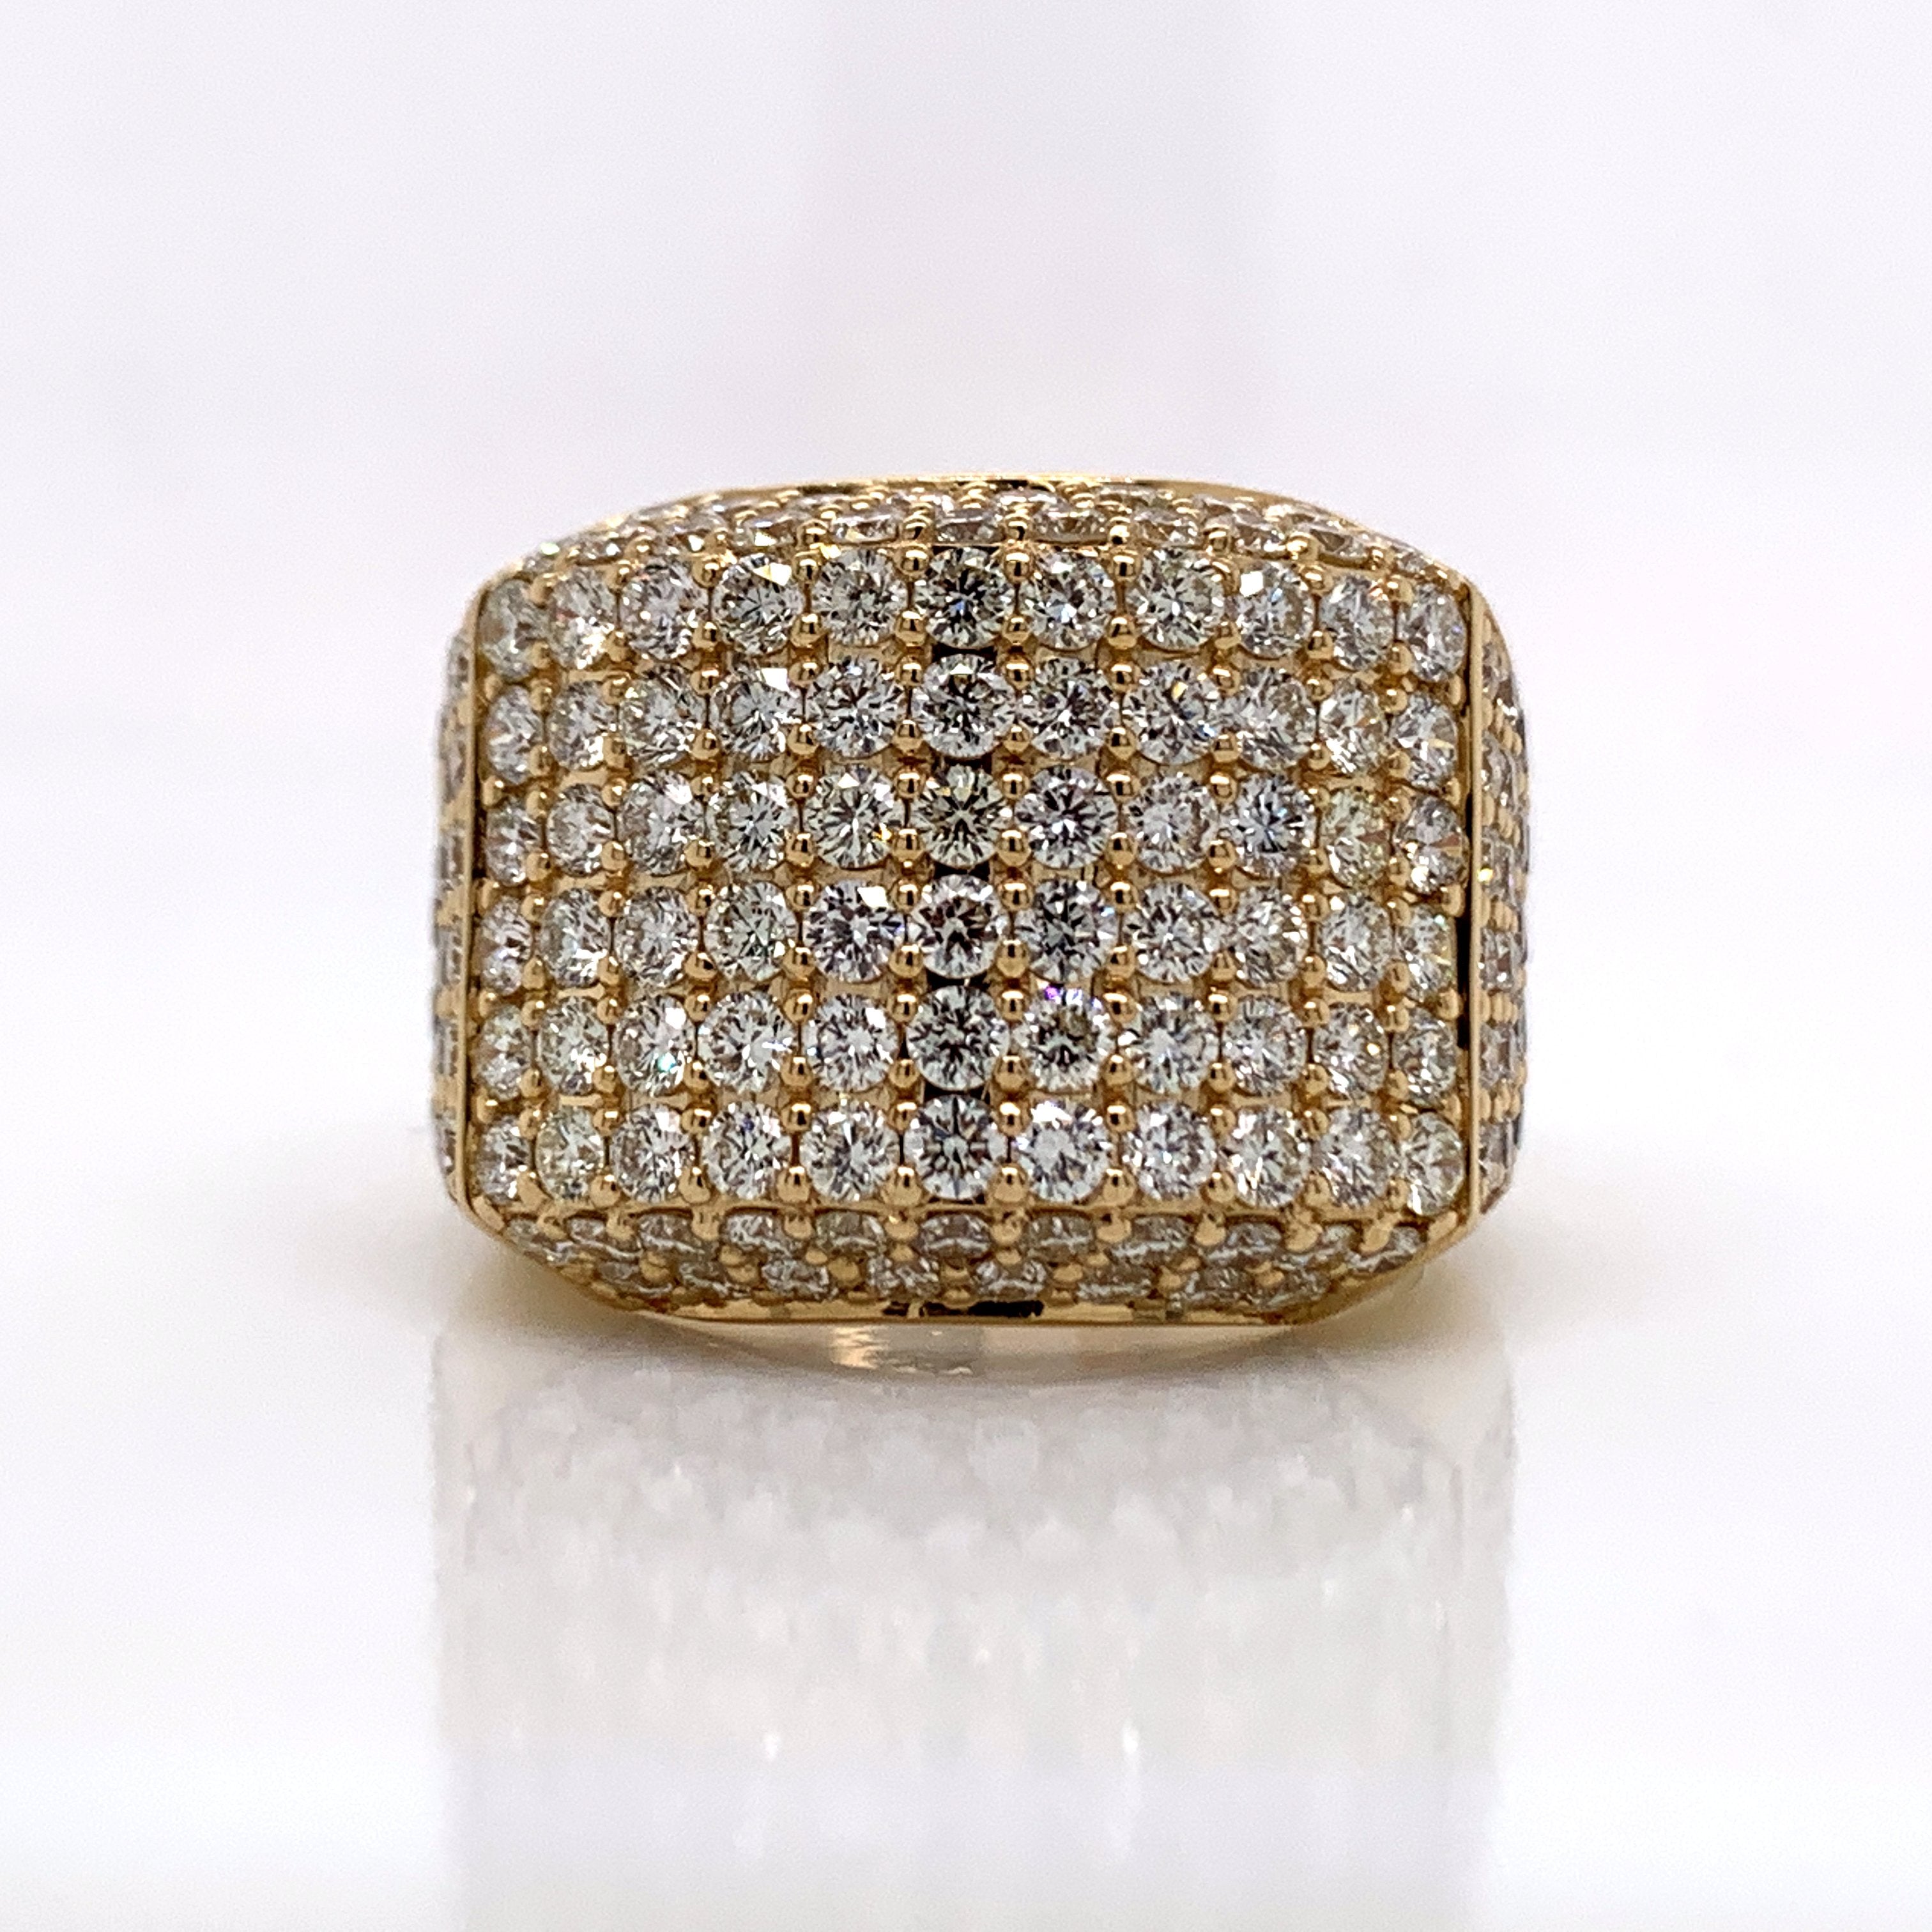 5.00 CT. Diamond Ring in 14K Gold - White Carat Diamonds 